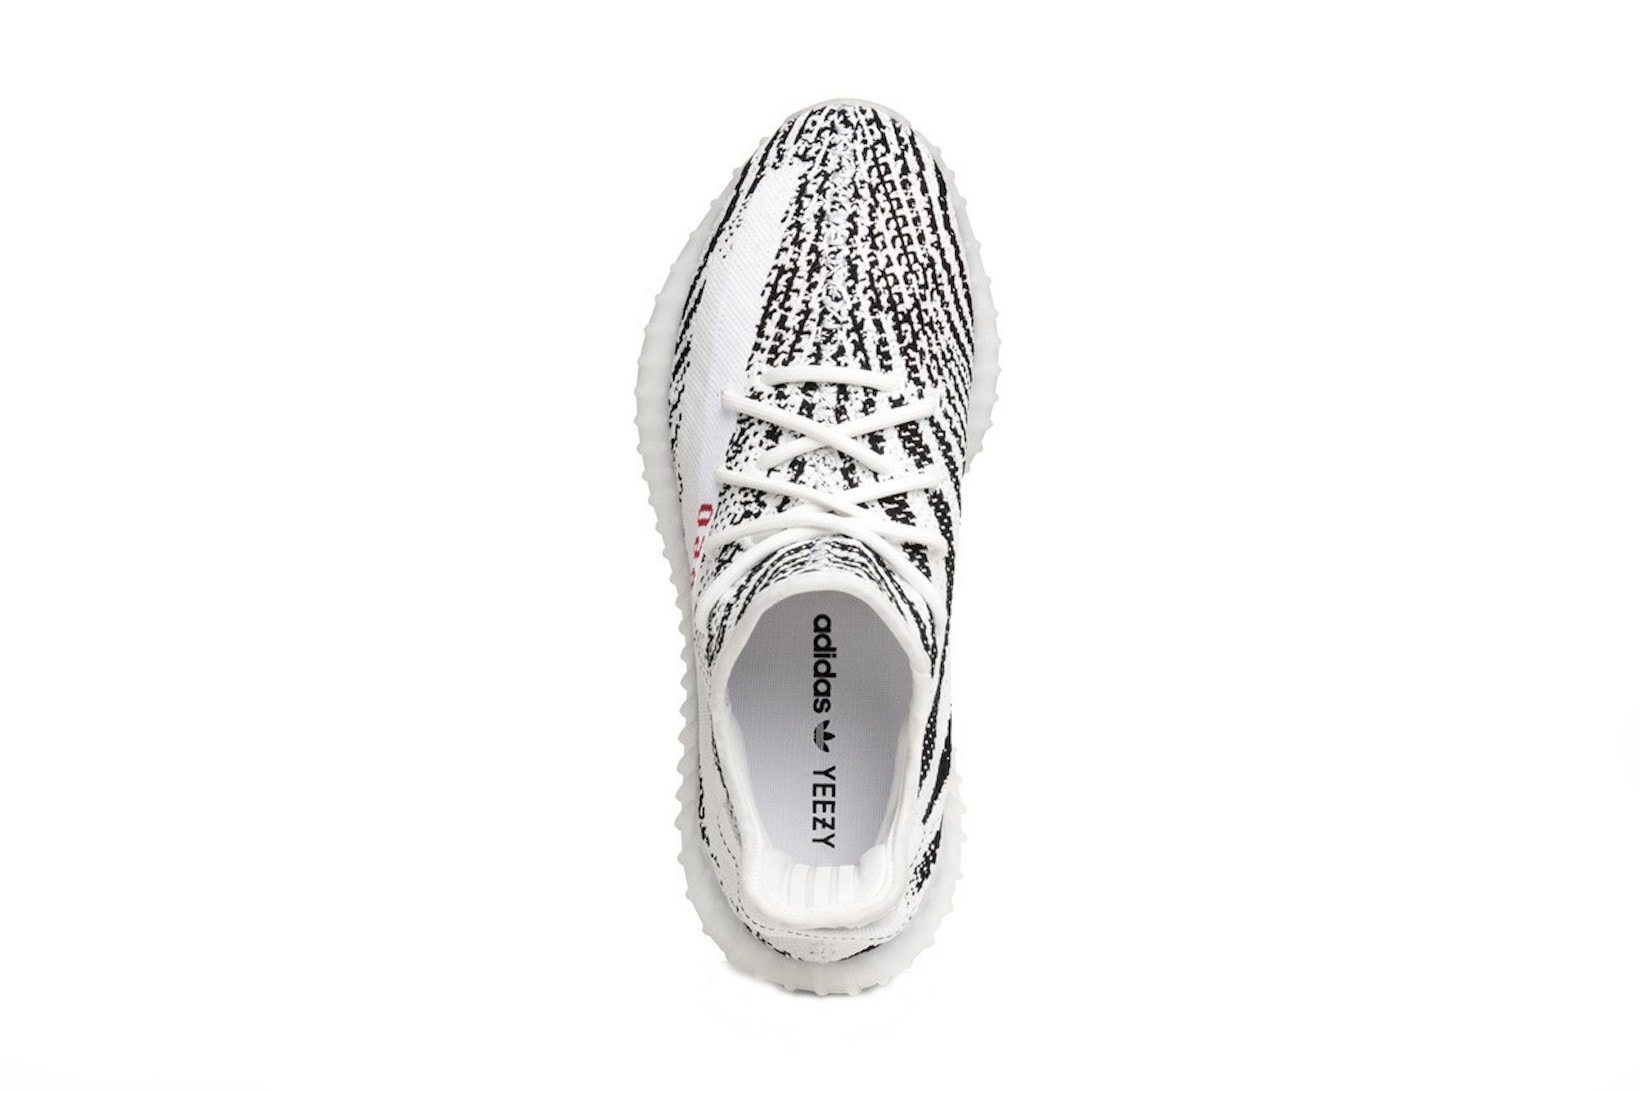 adidas YEEZY BOOST 350 V2 Zebra White Black Sneakers Footwear Kicks Shoes